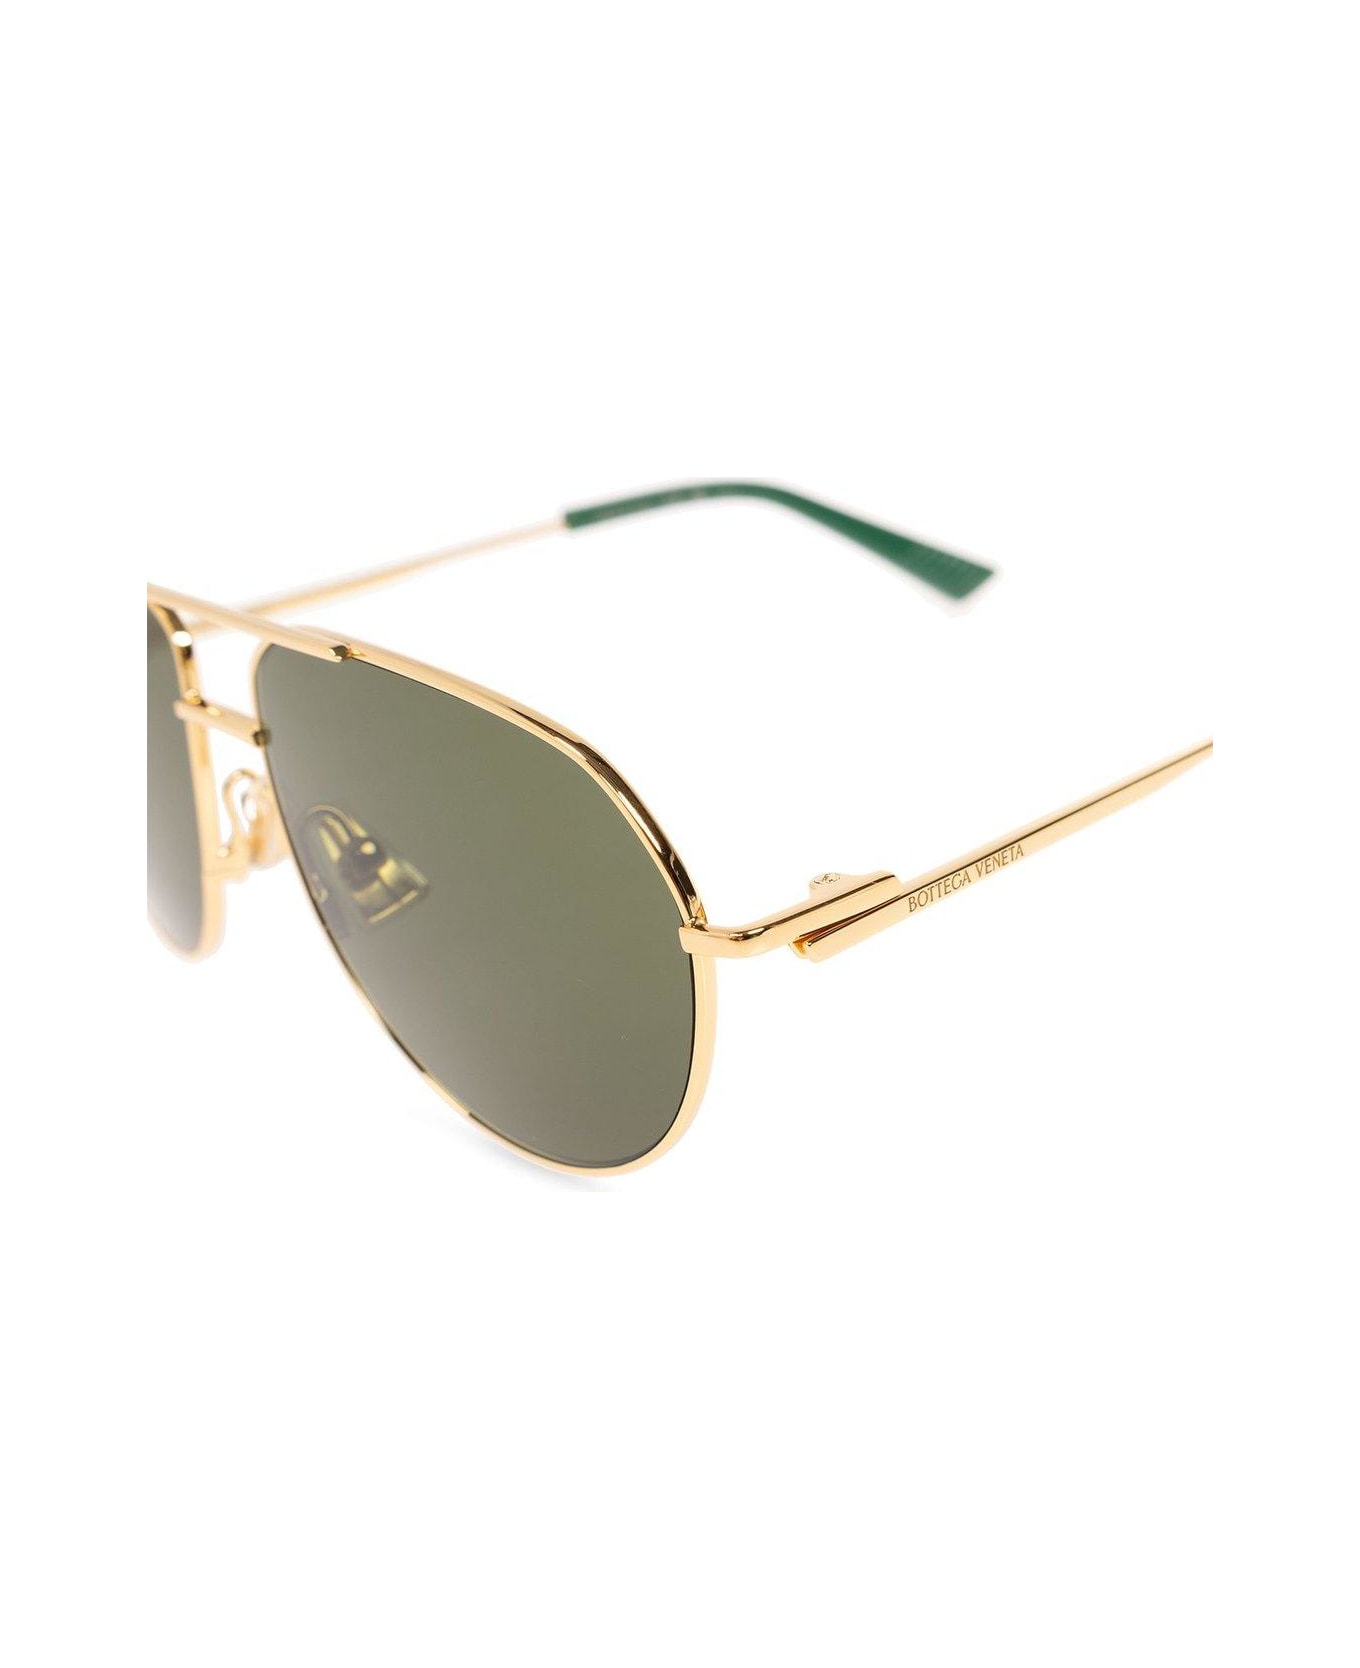 Bottega Veneta Eyewear Split Rectangular Sunglasses - Gold Green サングラス